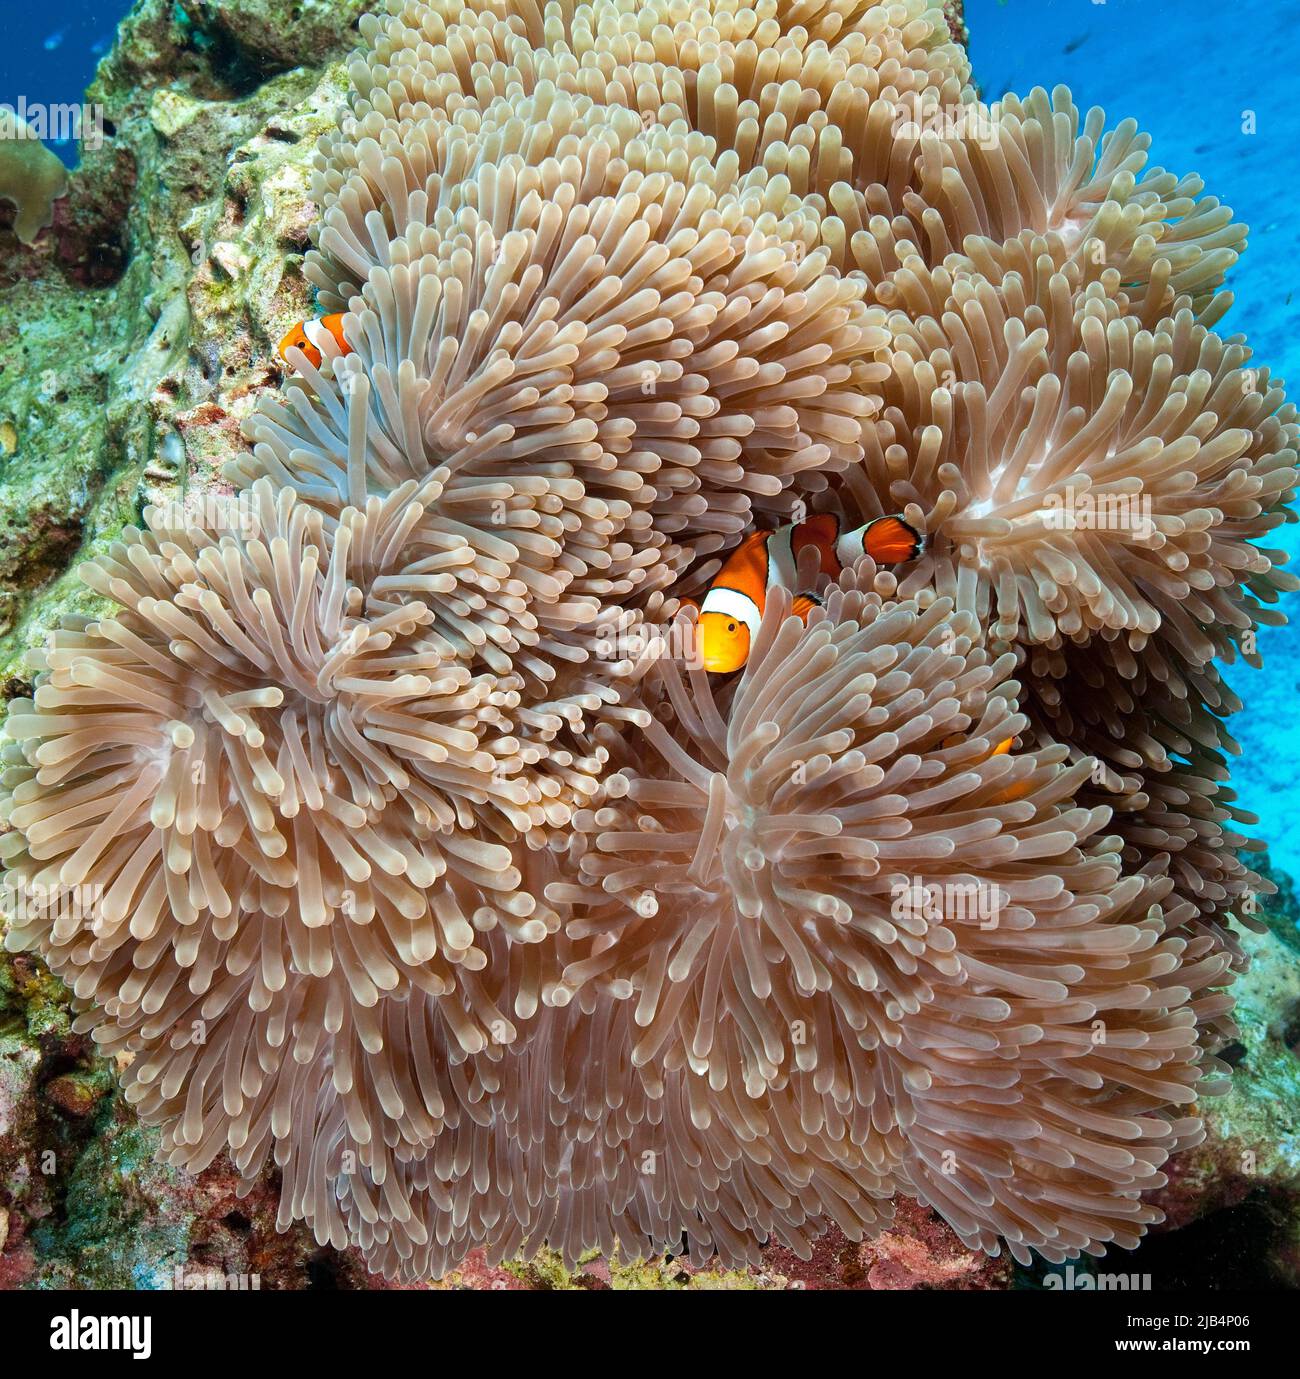 Pair of ocellaris clownfish (Amphiprion ocellaris) hiding between tentacles of giant carpet anemone (Stichodactyla gigantea), Indian Ocean, Maldives Stock Photo